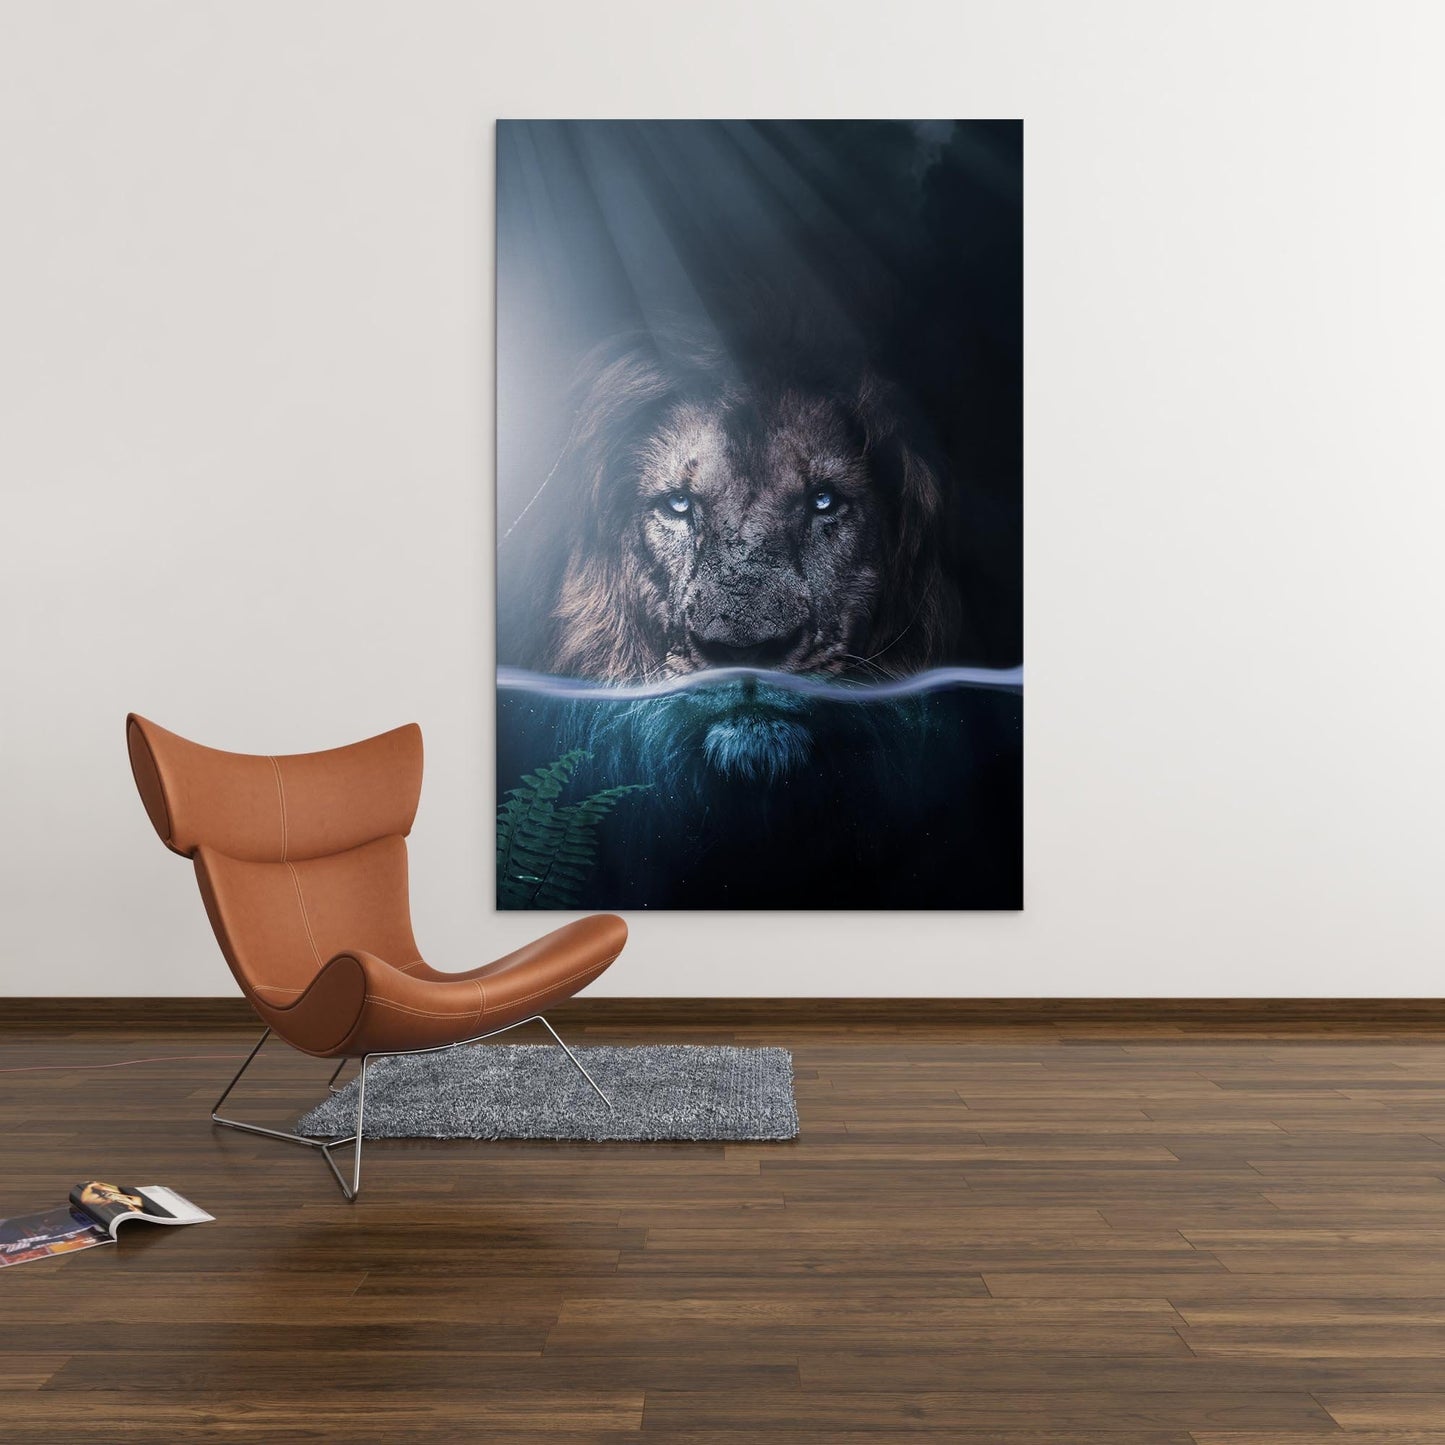 Underwater Lion Wall Art | Inspirational Wall Art Motivational Wall Art Quotes Office Art | ImpaktMaker Exclusive Canvas Art Portrait